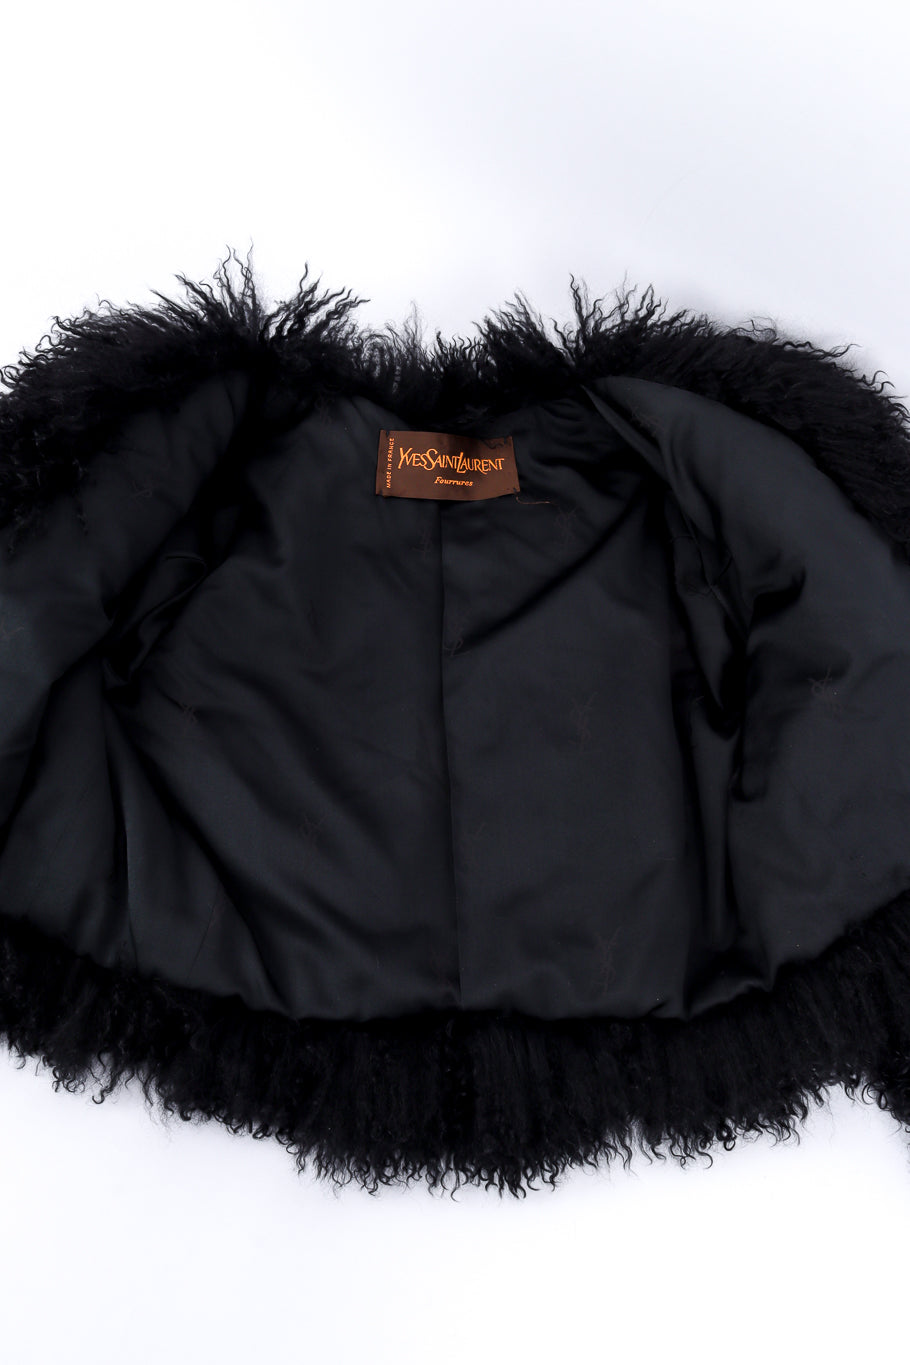 Yves Saint Laurent Mongolian Fur Jacket view of lining @recessla